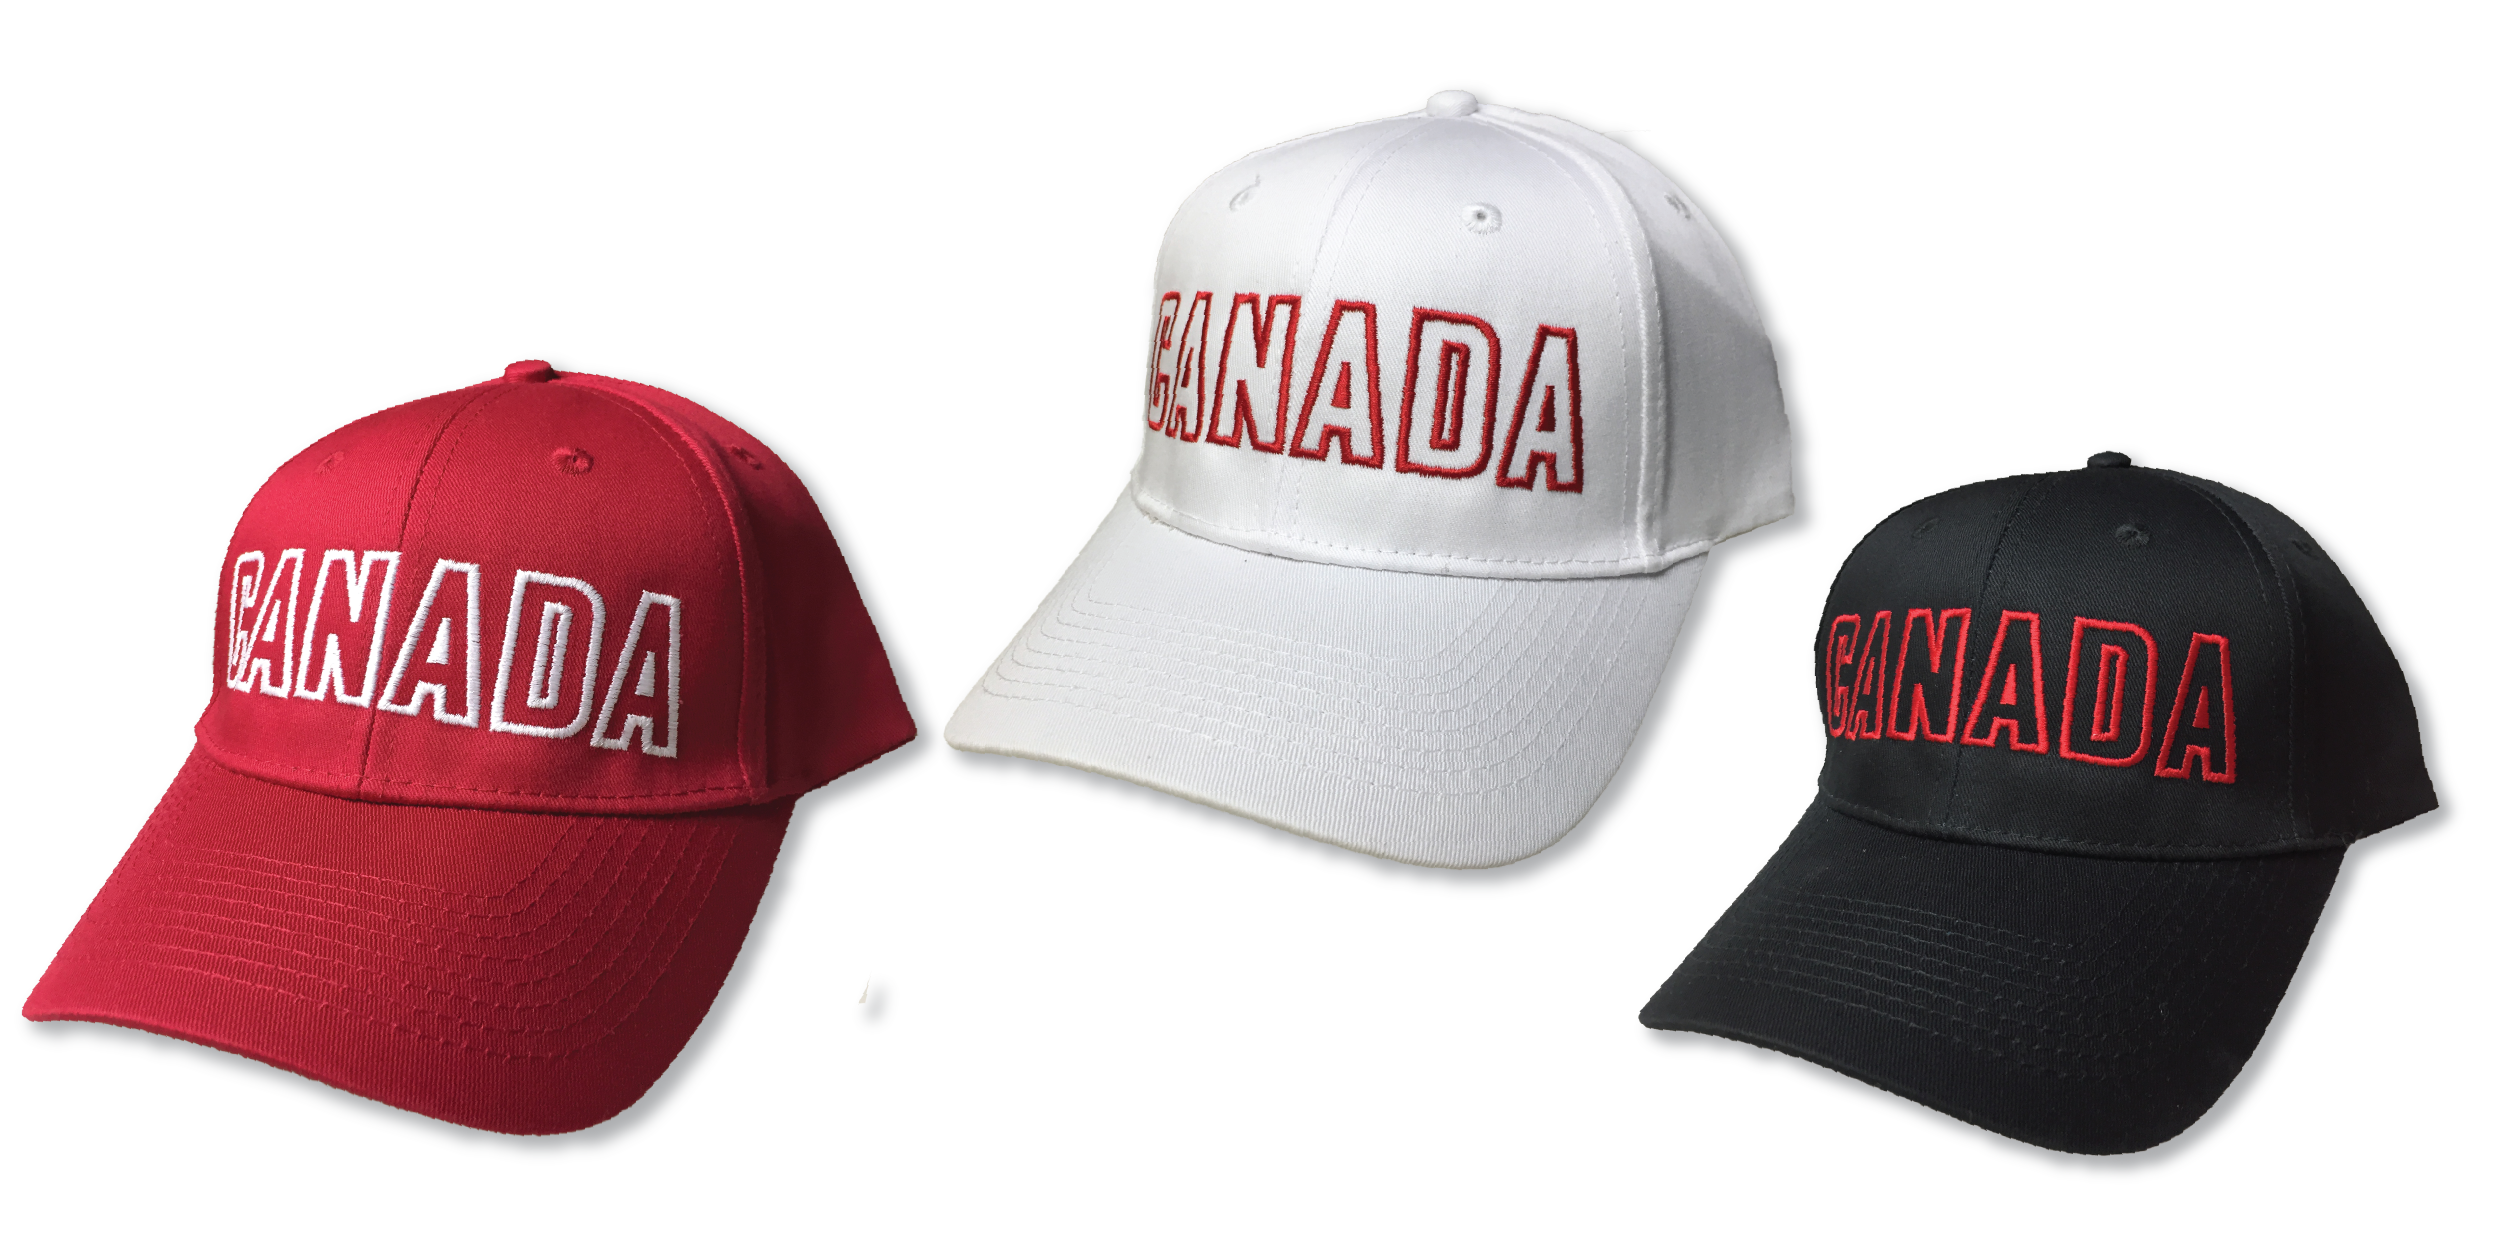 OCG Canada Block Ball Caps